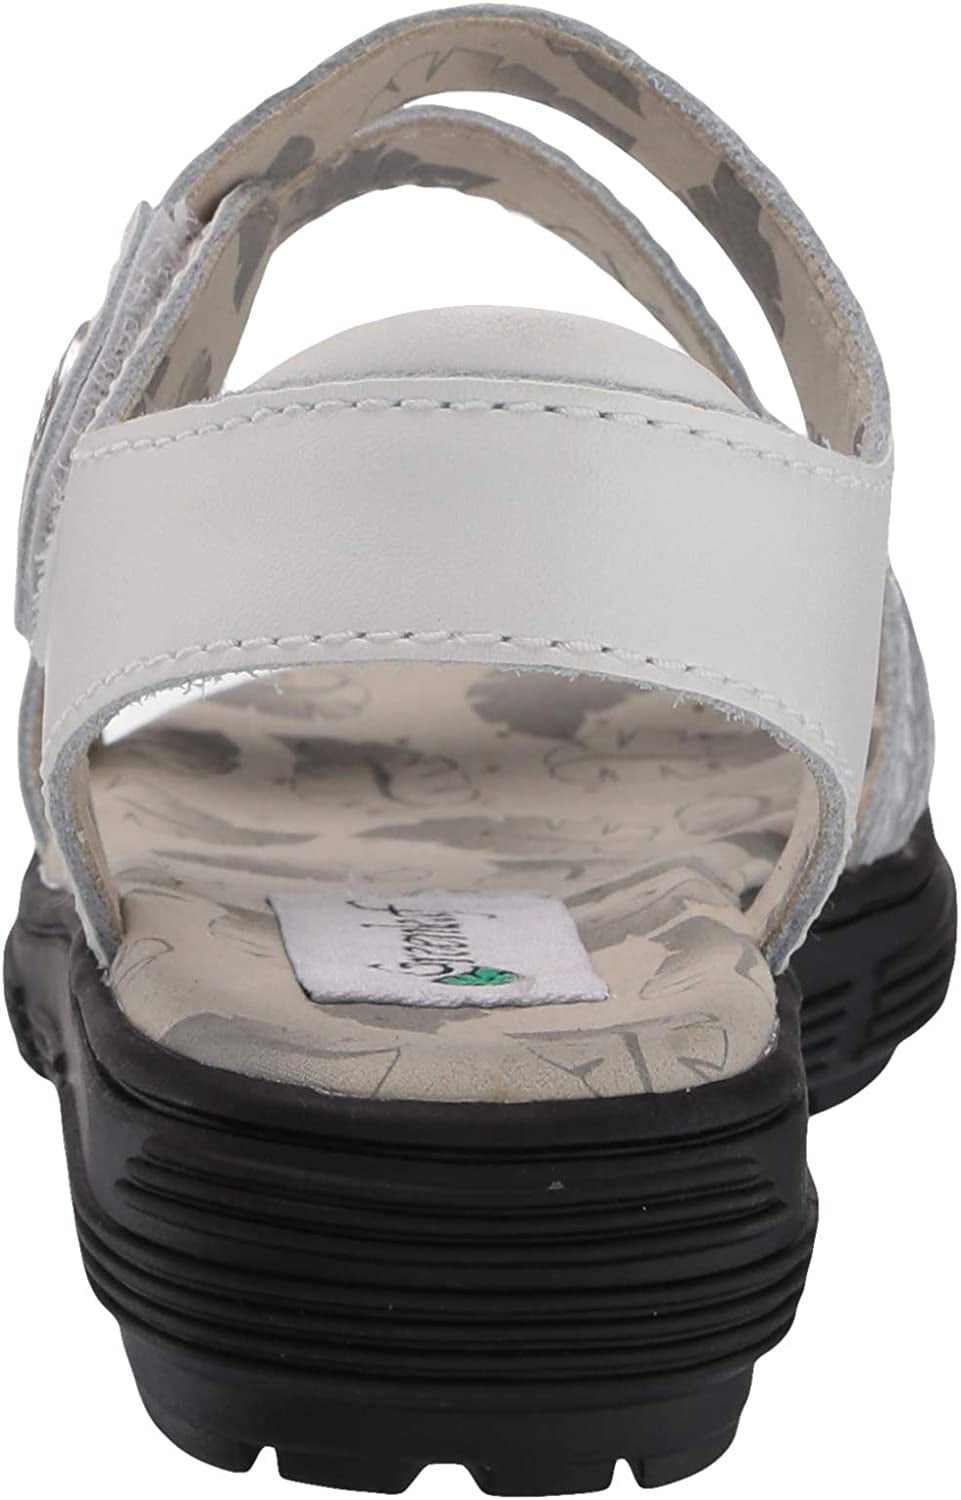 Amazon.com | Greenleaf Women's Golf Sandal Shoe, Patent Black, 5 M US | Golf